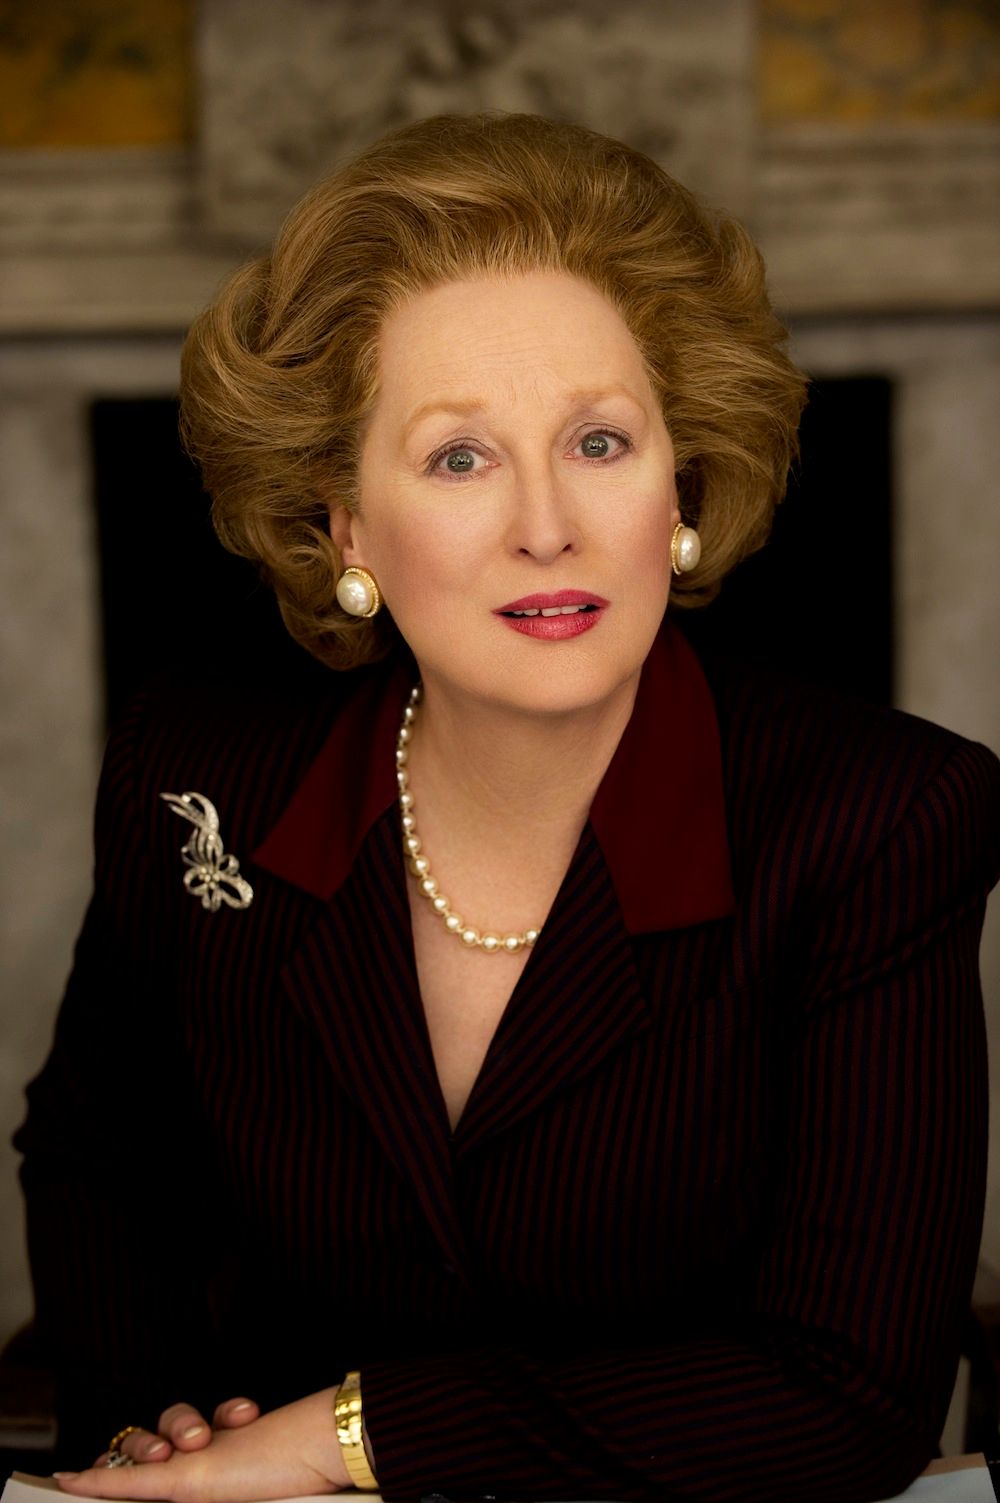 The Iron Lady Photo Featuring Meryl Streep As Margaret Thatcher